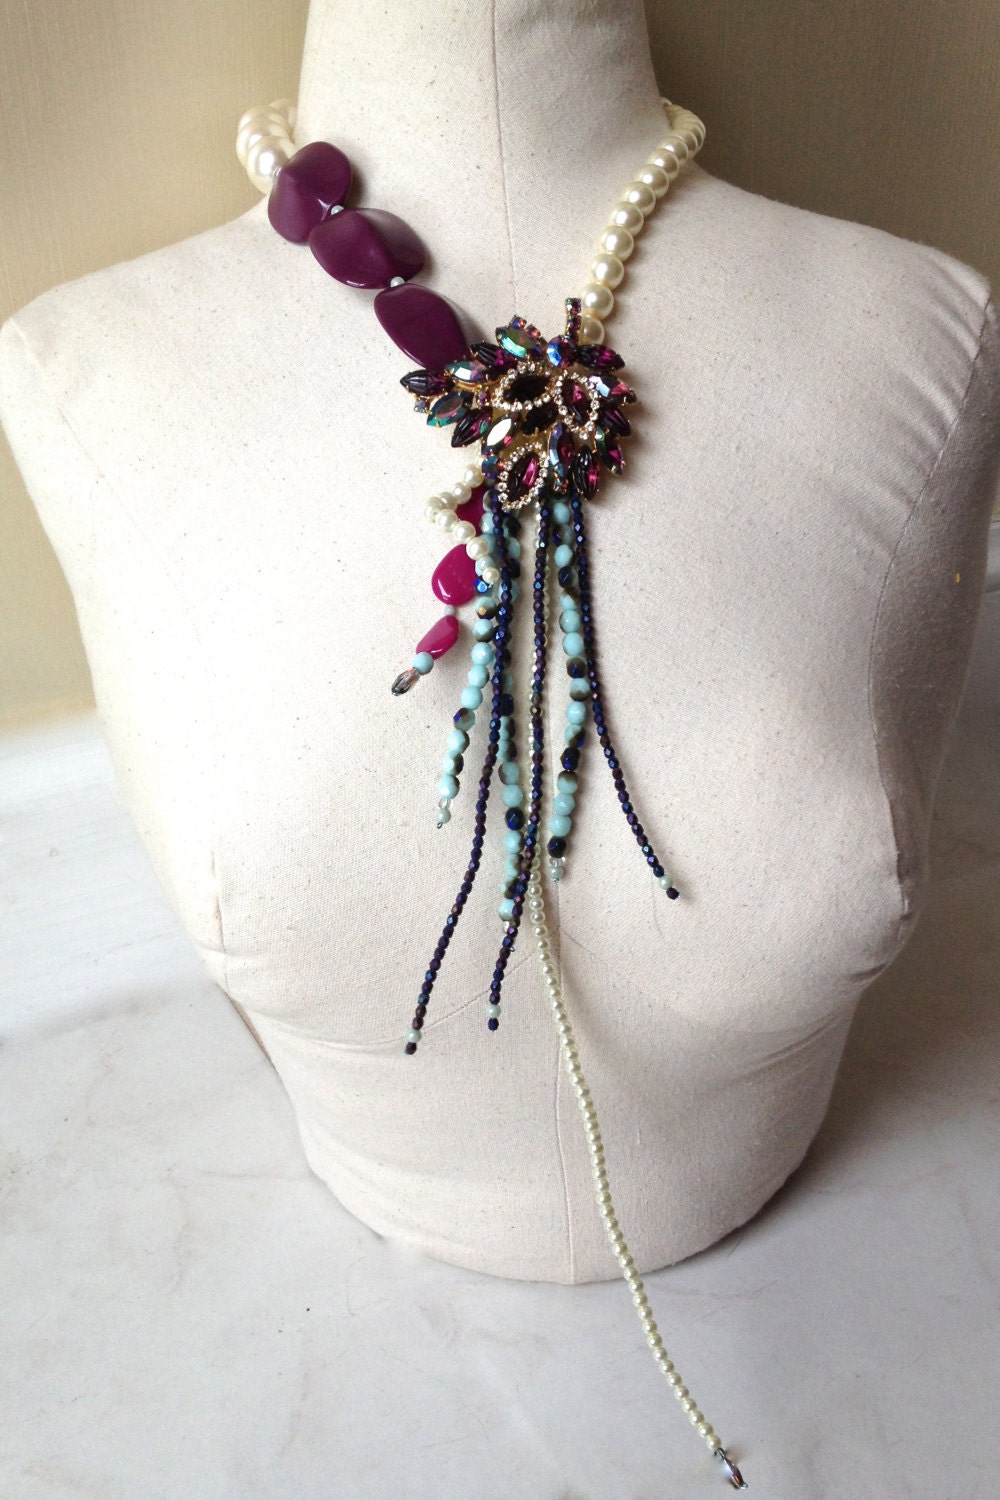 Wedding Brooch Rhinestone Pearl Flapper Necklace in Plum, Turquoise, Purple, Aqua, Blue & Cream Statement Jewelry by ZILLAS QUEEN - ZiLLAsQuEeN